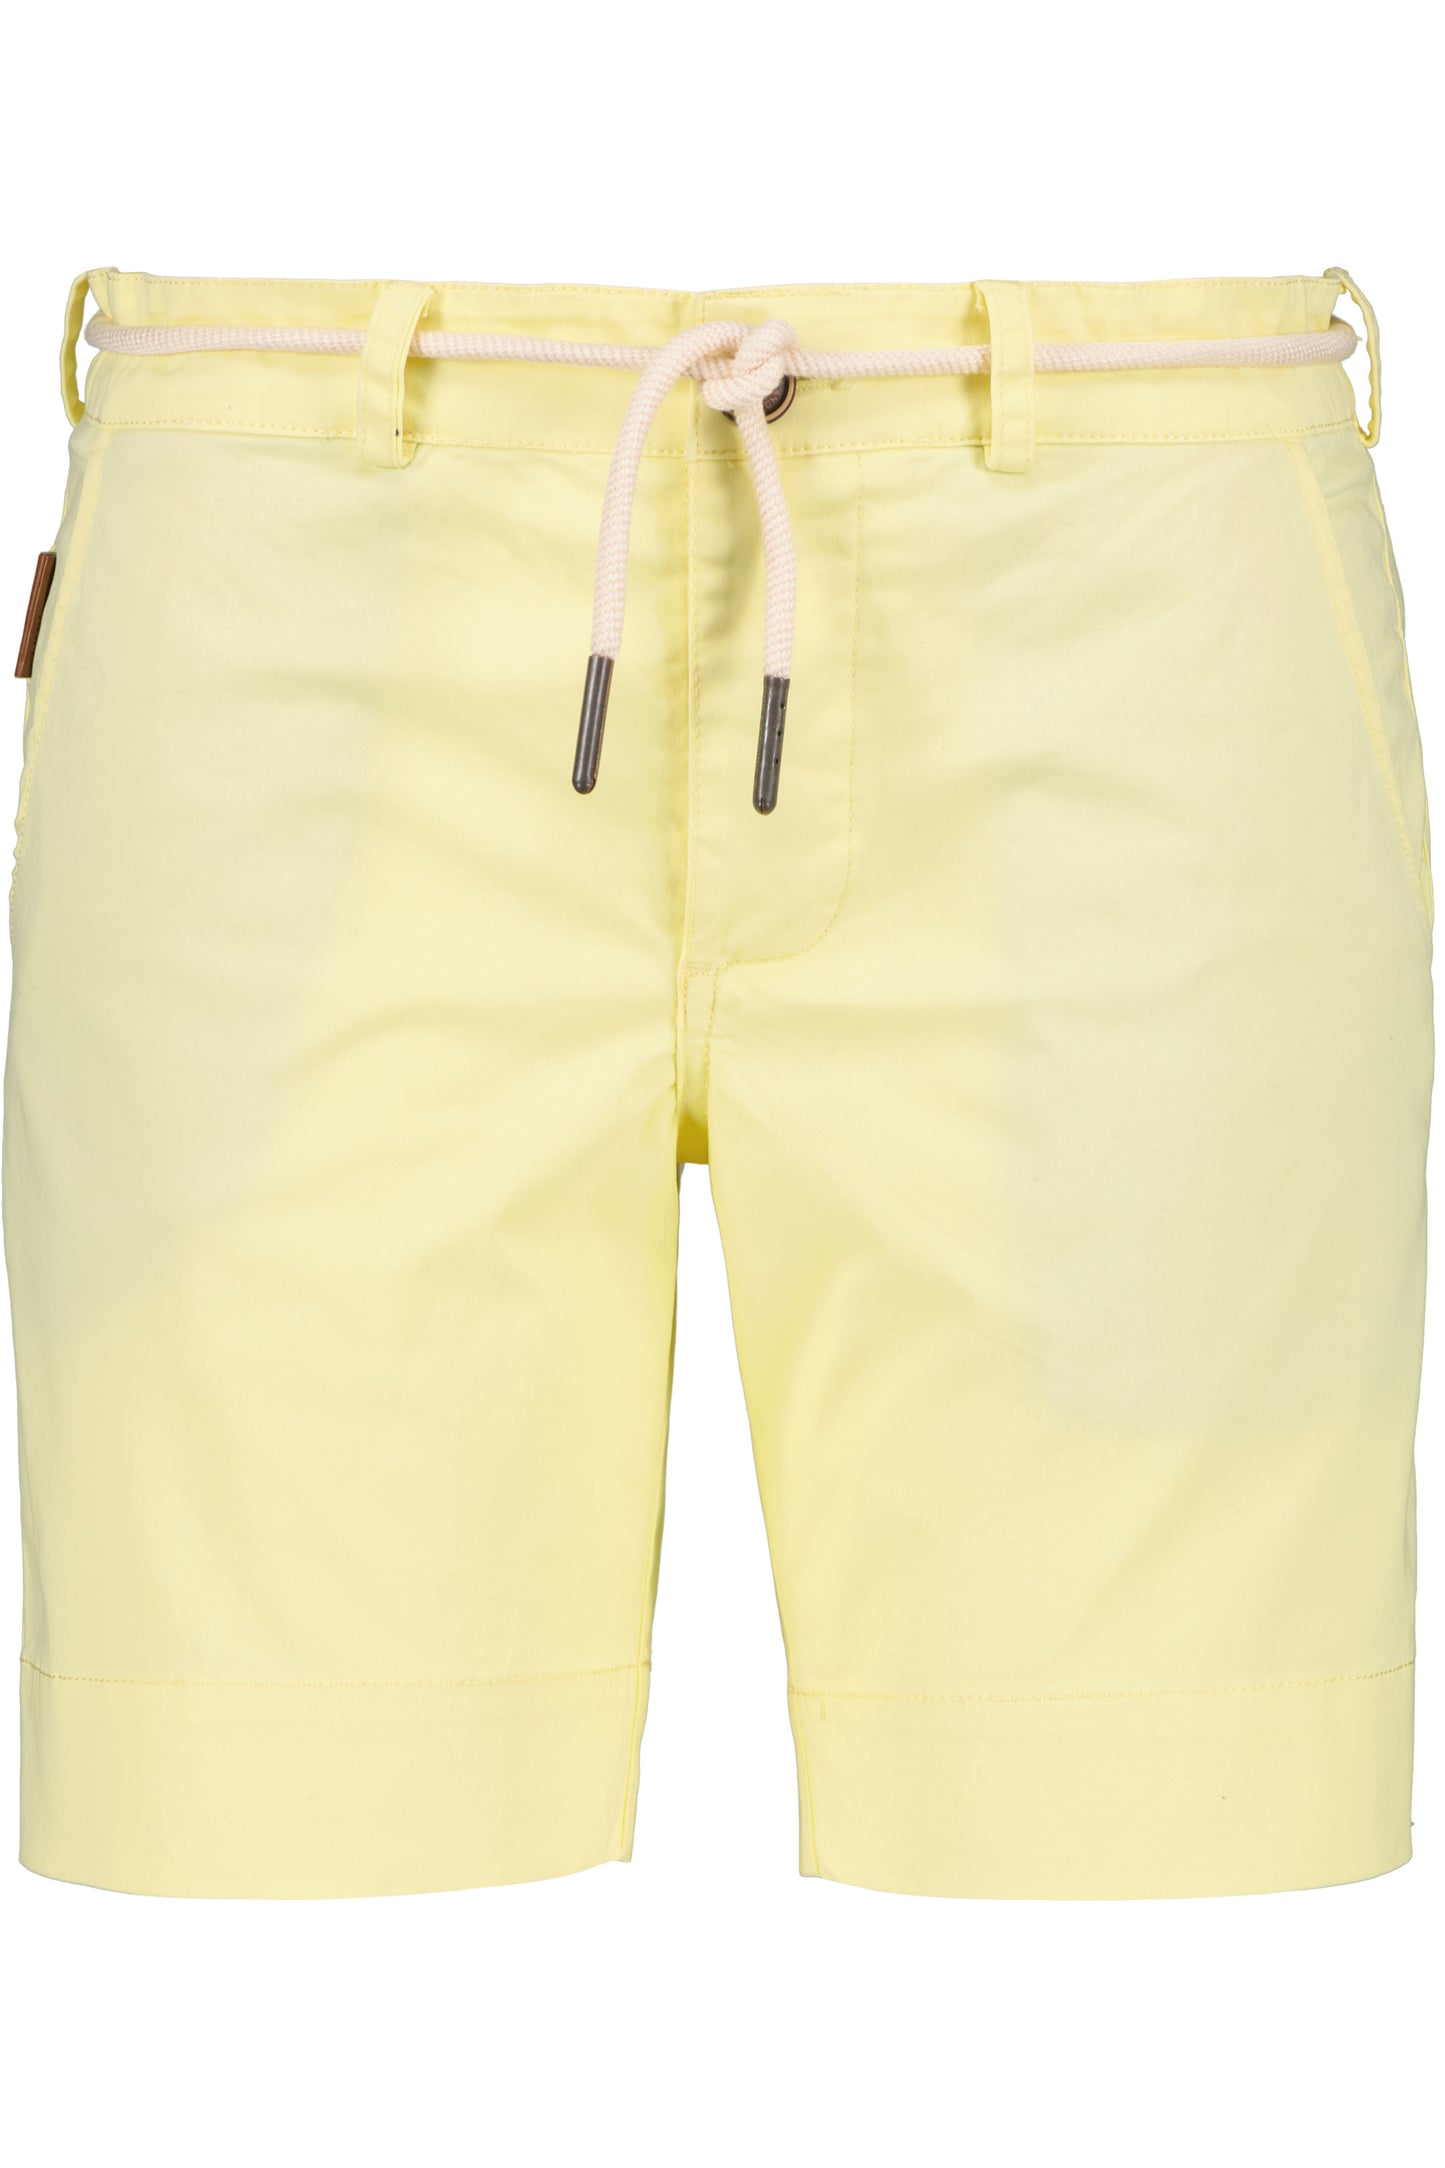 Damen-Shorts JuleAK Long für den perfekten Sommer-Look Gelb